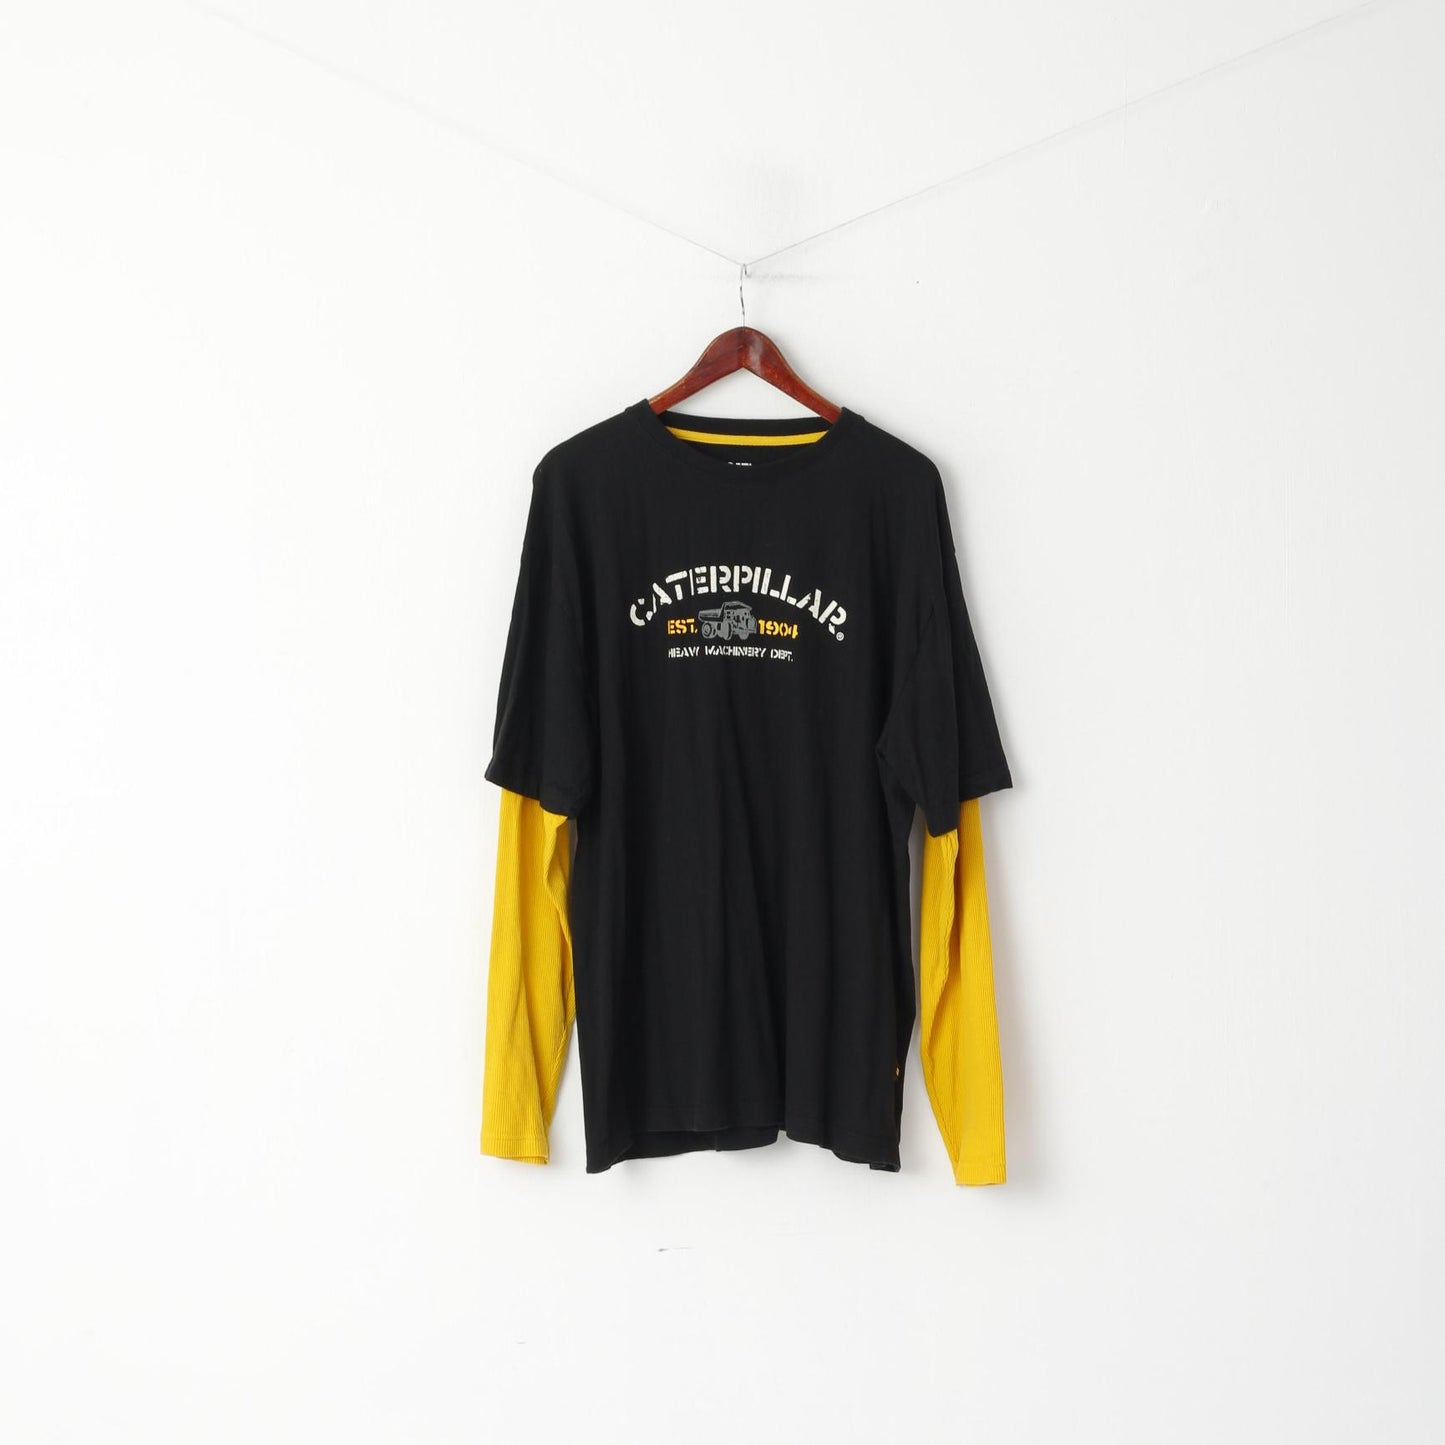 Caterpillar Cat Men 2XL Shirt Long Sleeve Black Yellow Graphic Cotton Top